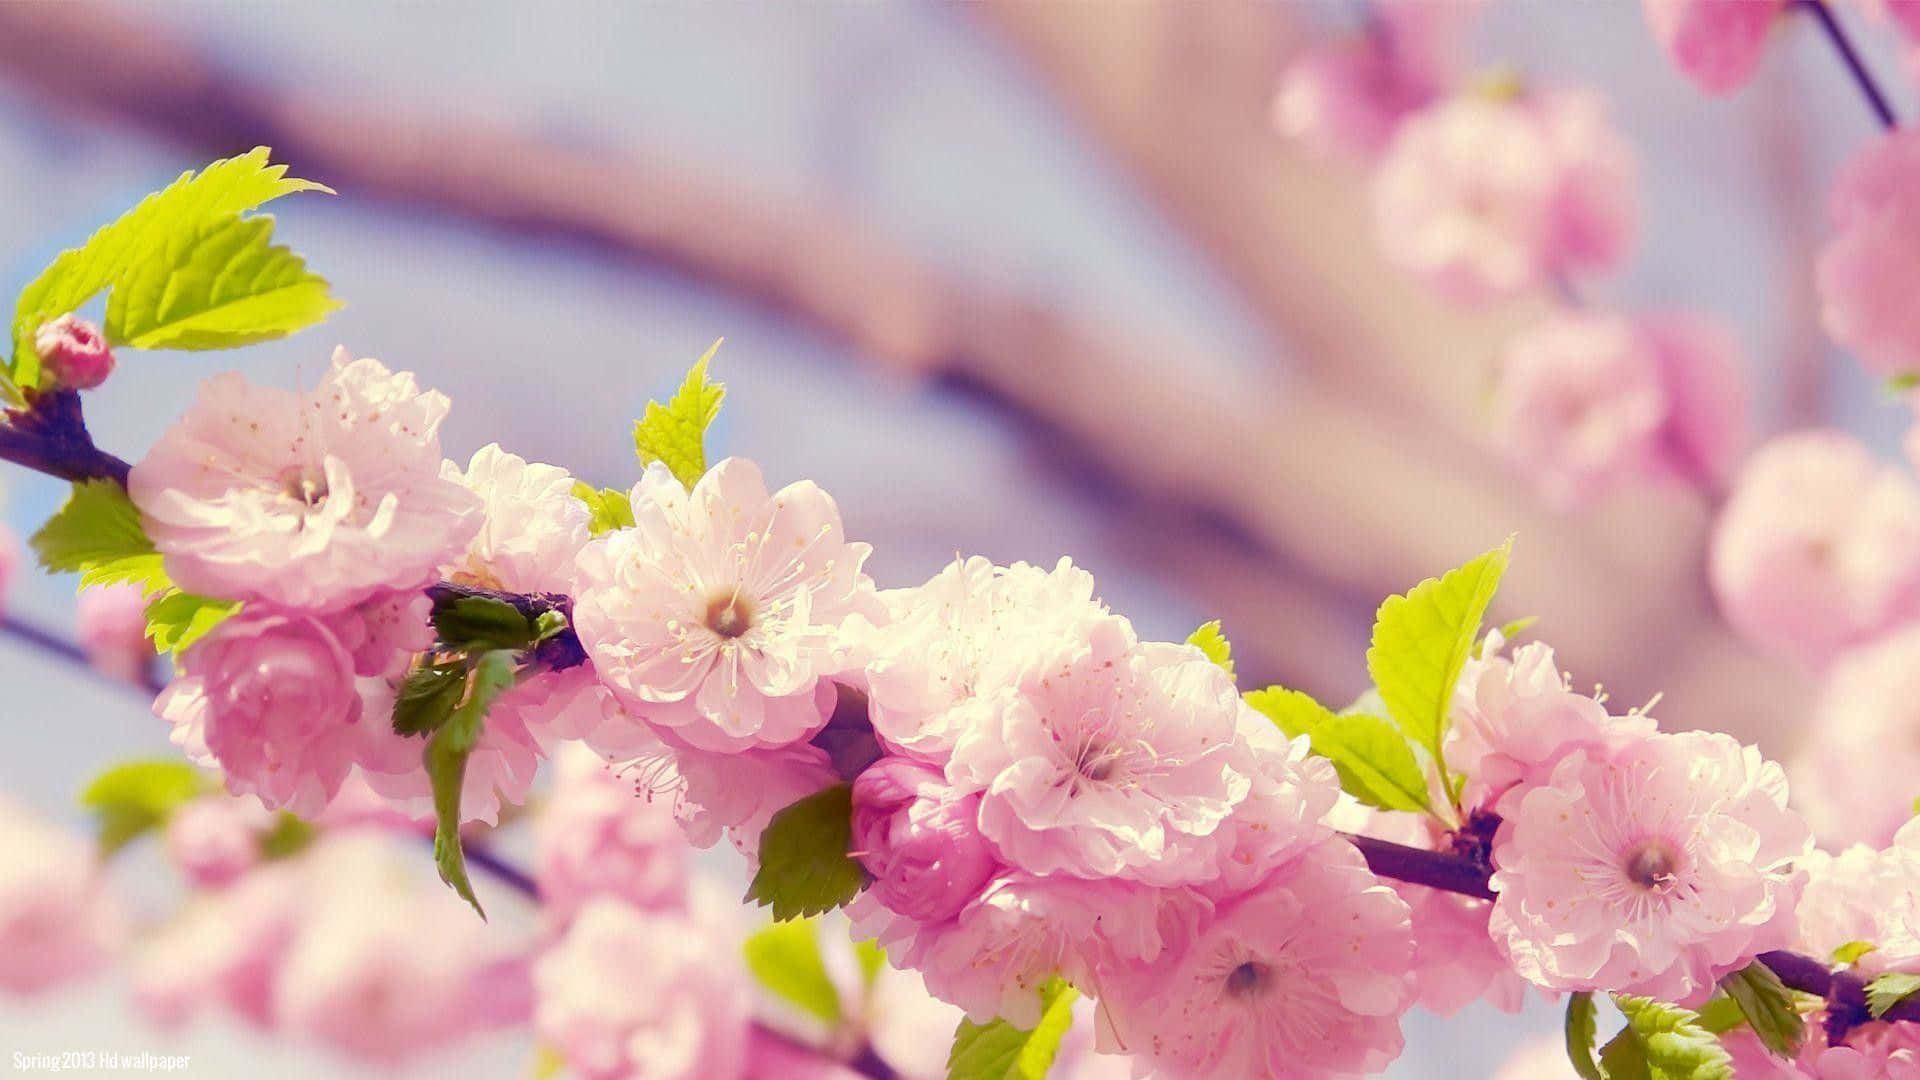 A vibrant spring bloom in full display Wallpaper